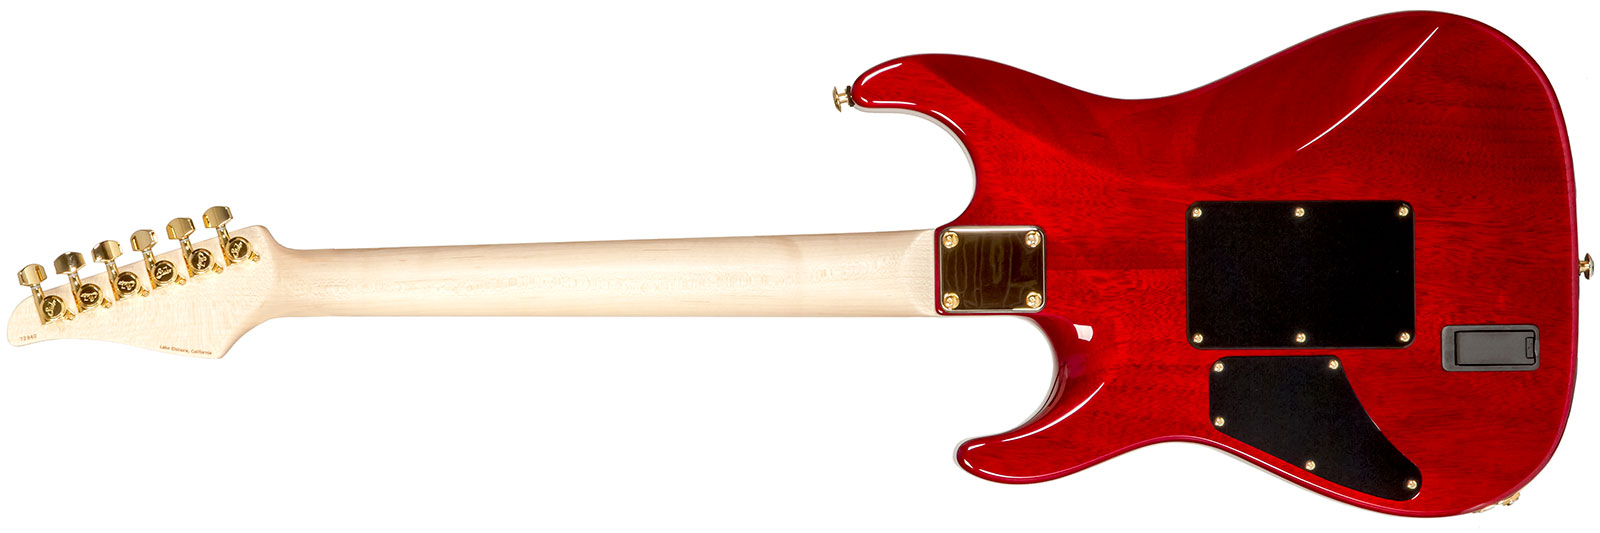 Suhr Standard Legacy 01-ltd-0030 Hss Emg Fr Rw #72940 - Aged Cherry Burst - E-Gitarre in Str-Form - Variation 1